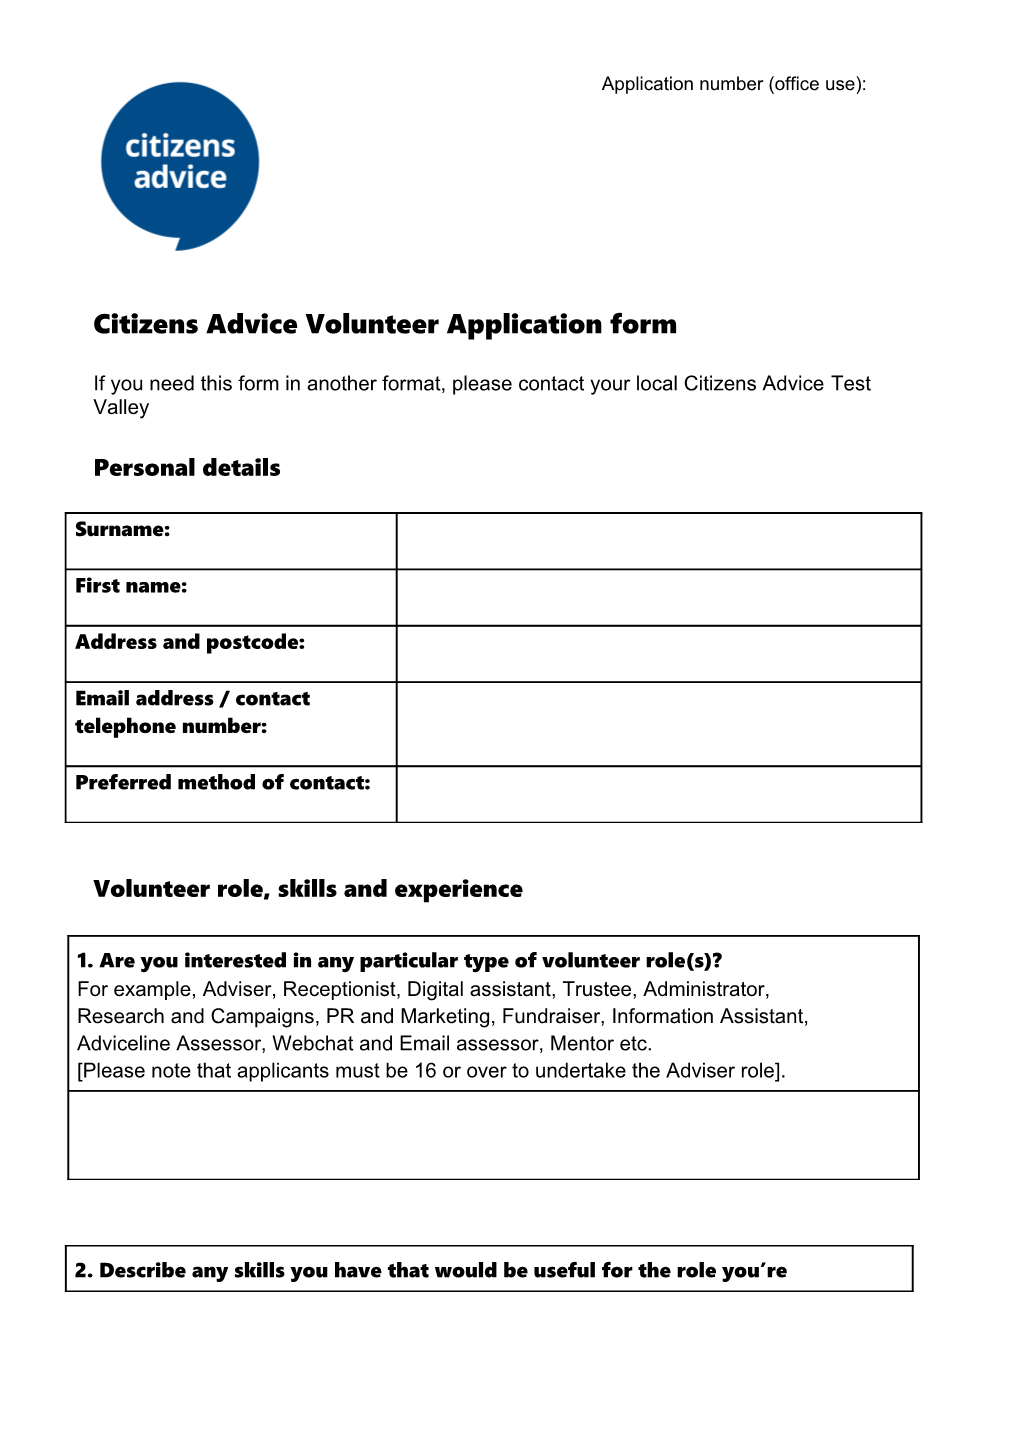 Citizens Advice Volunteer Application Form